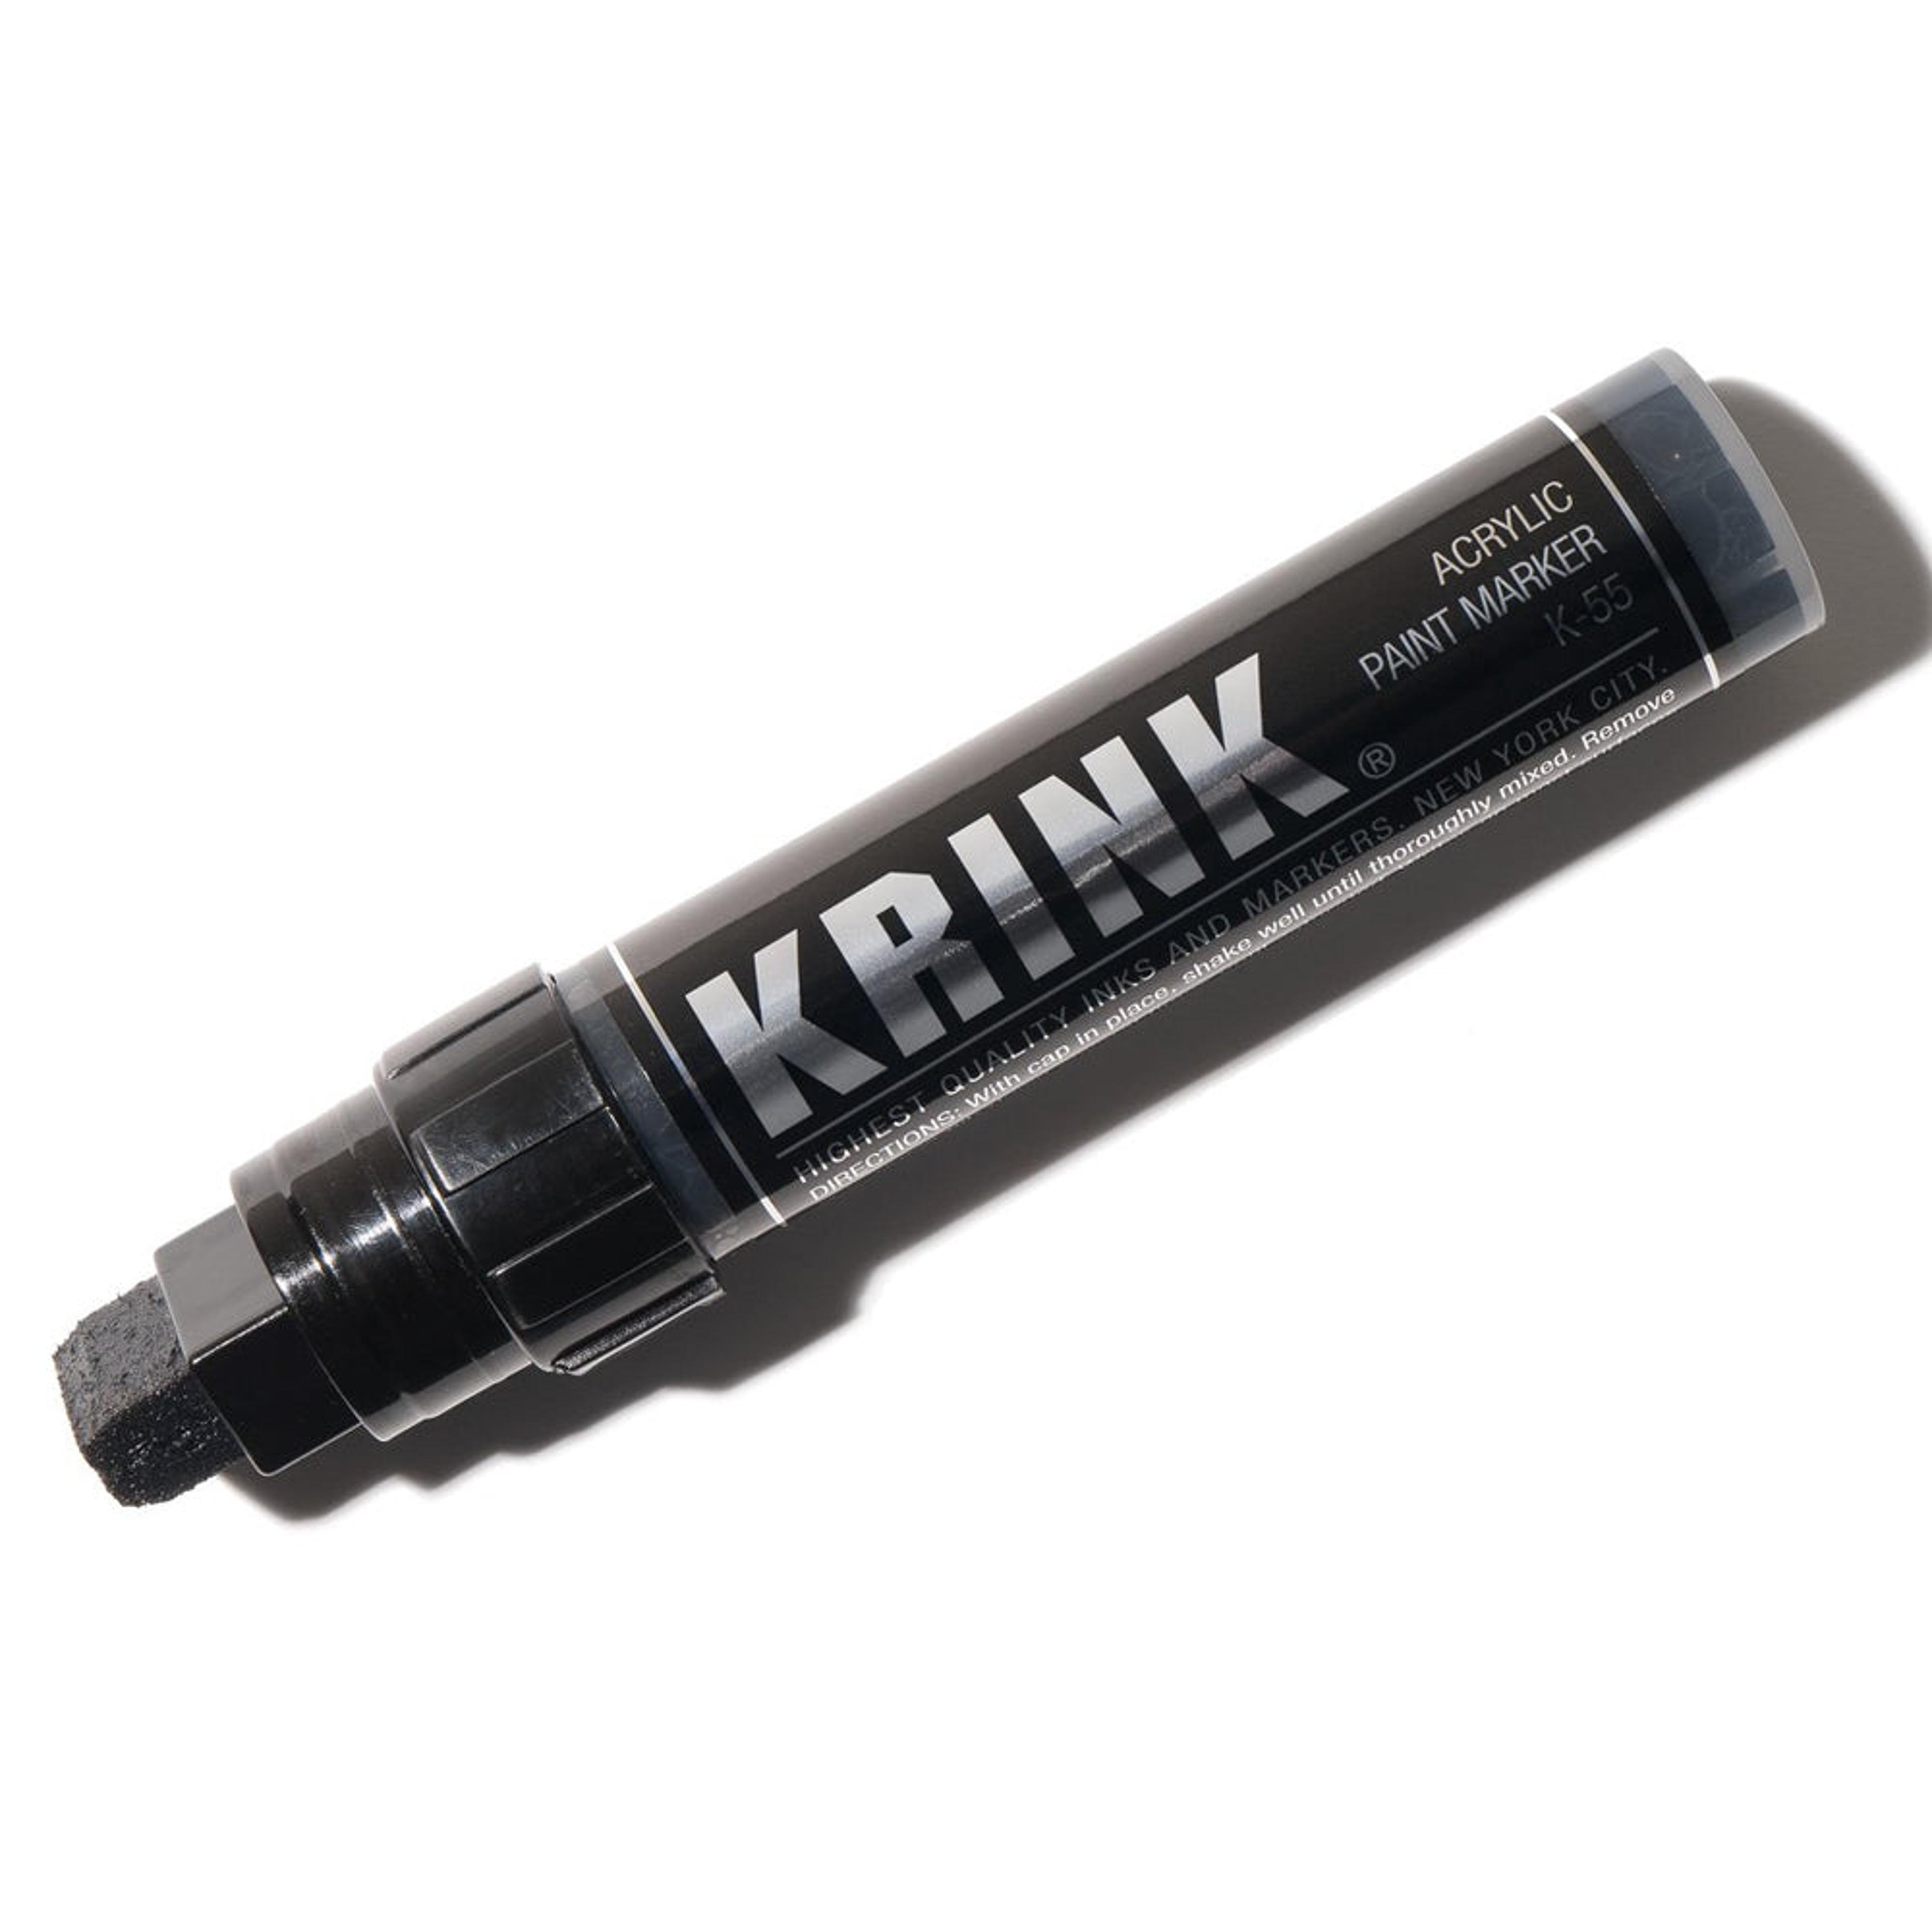 Krink K - 75 Paint Marker - Black